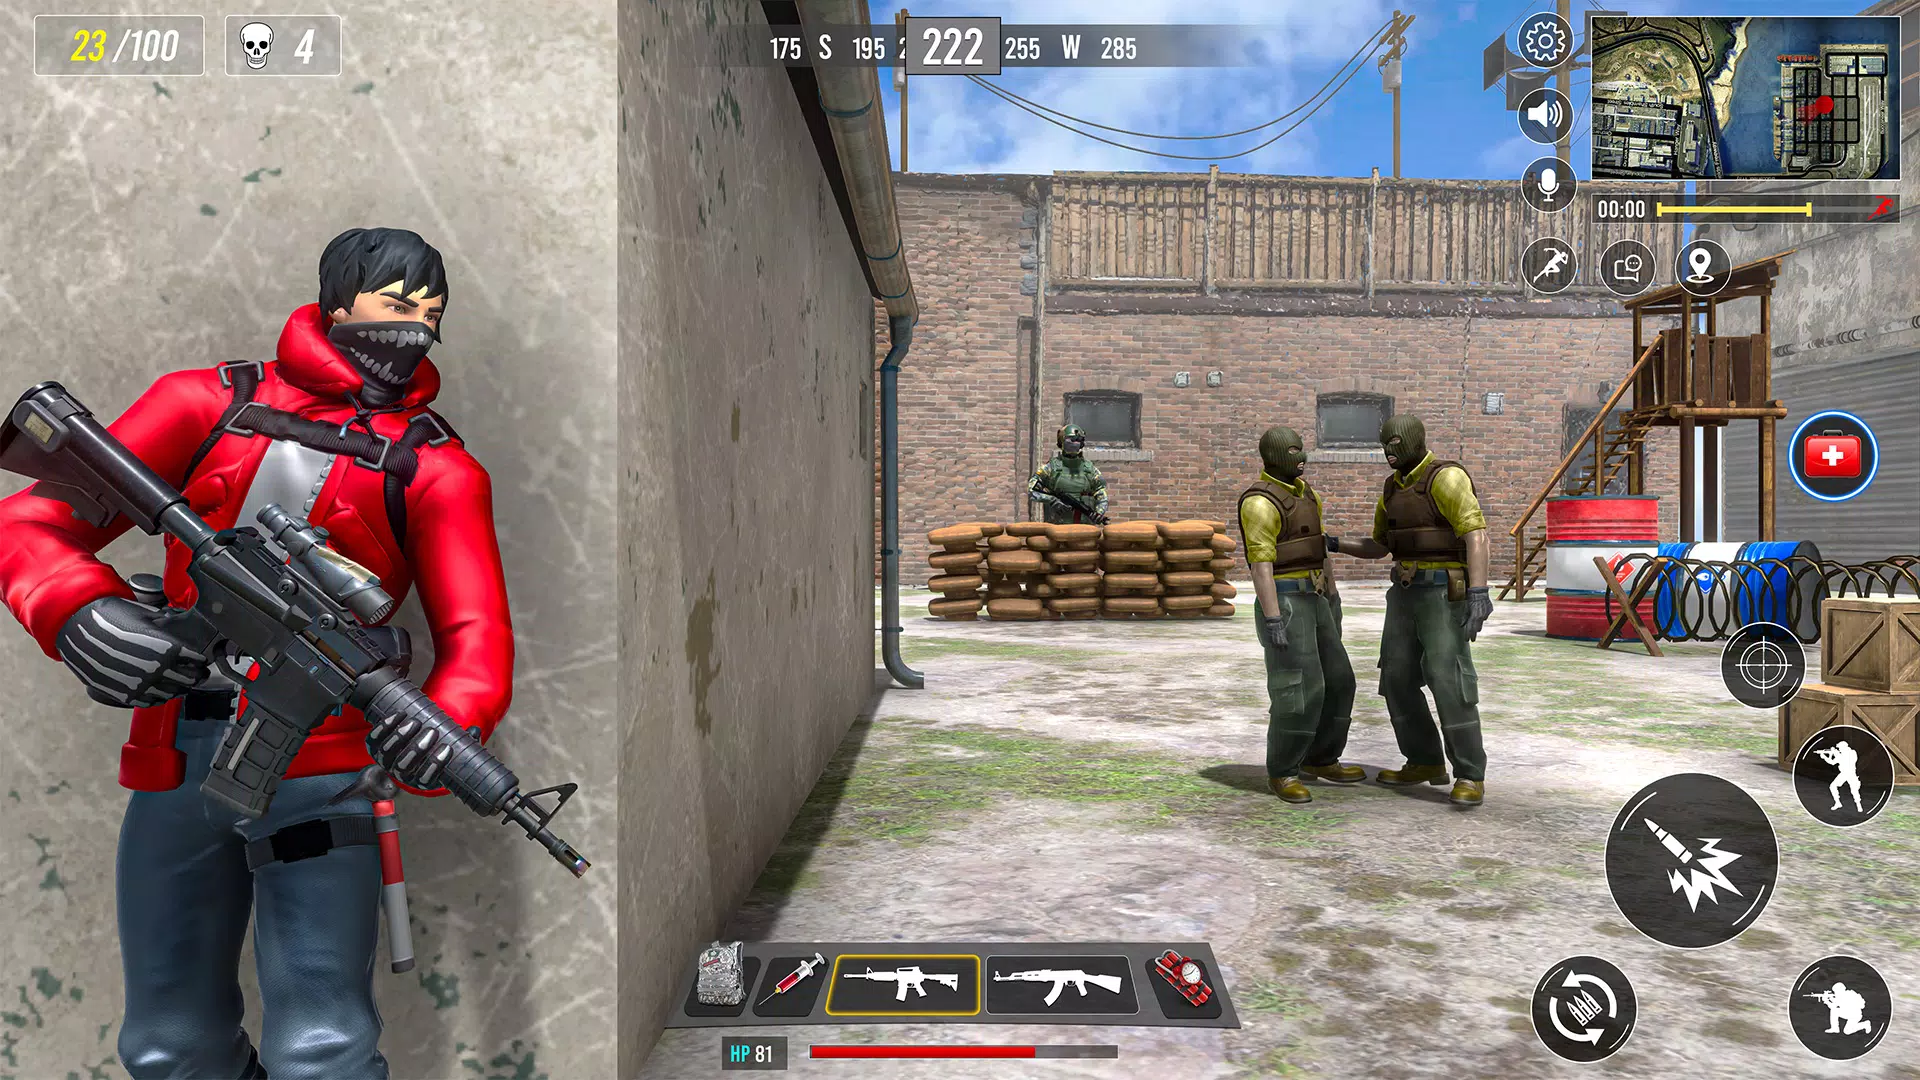 Gun Games - FPS Shooting Game - Apps on Google Play